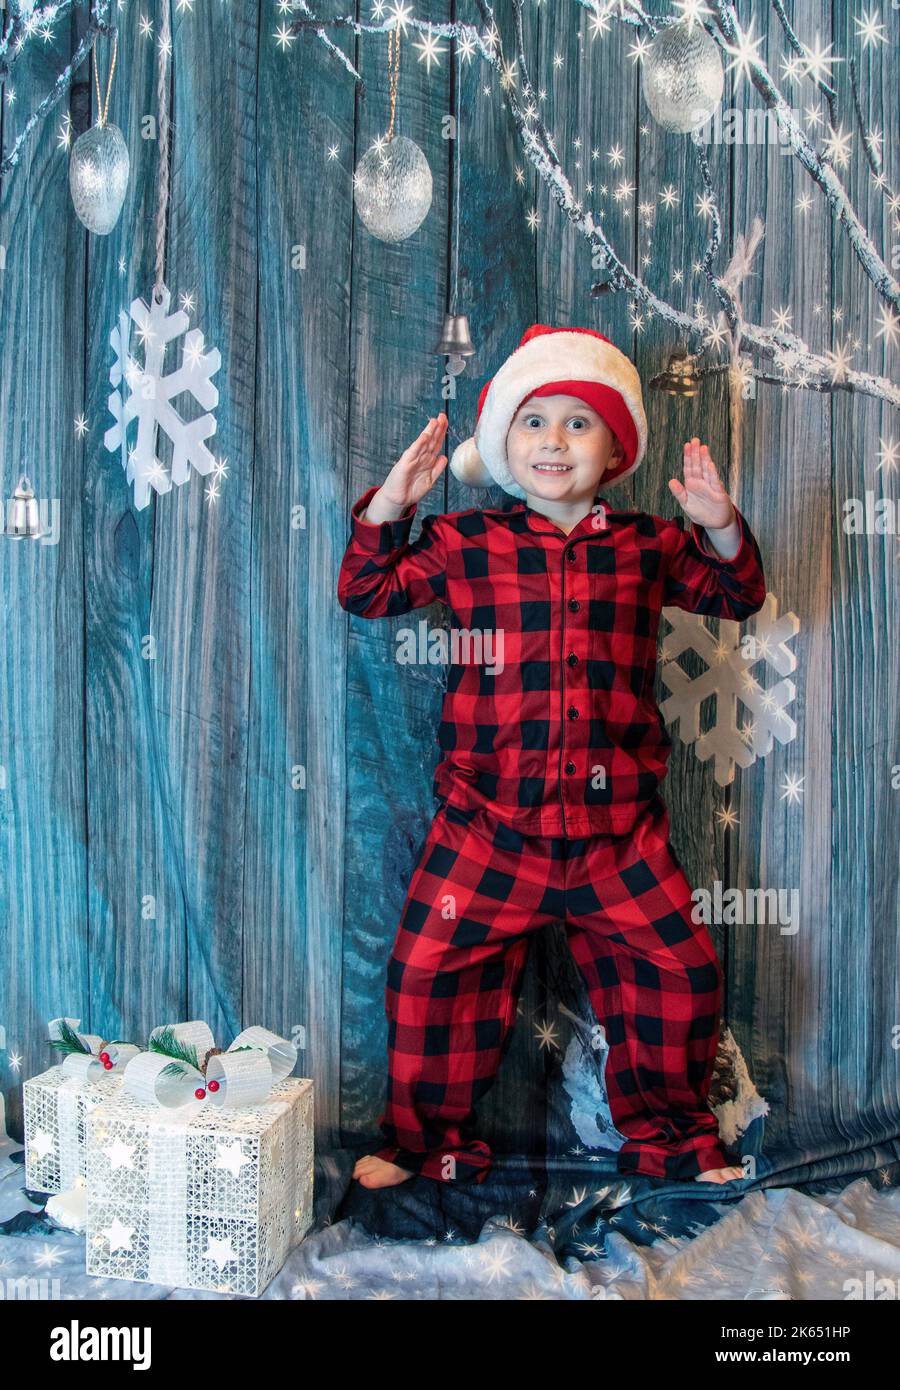 Young boy anxiously awaiting Christmas Stock Photo